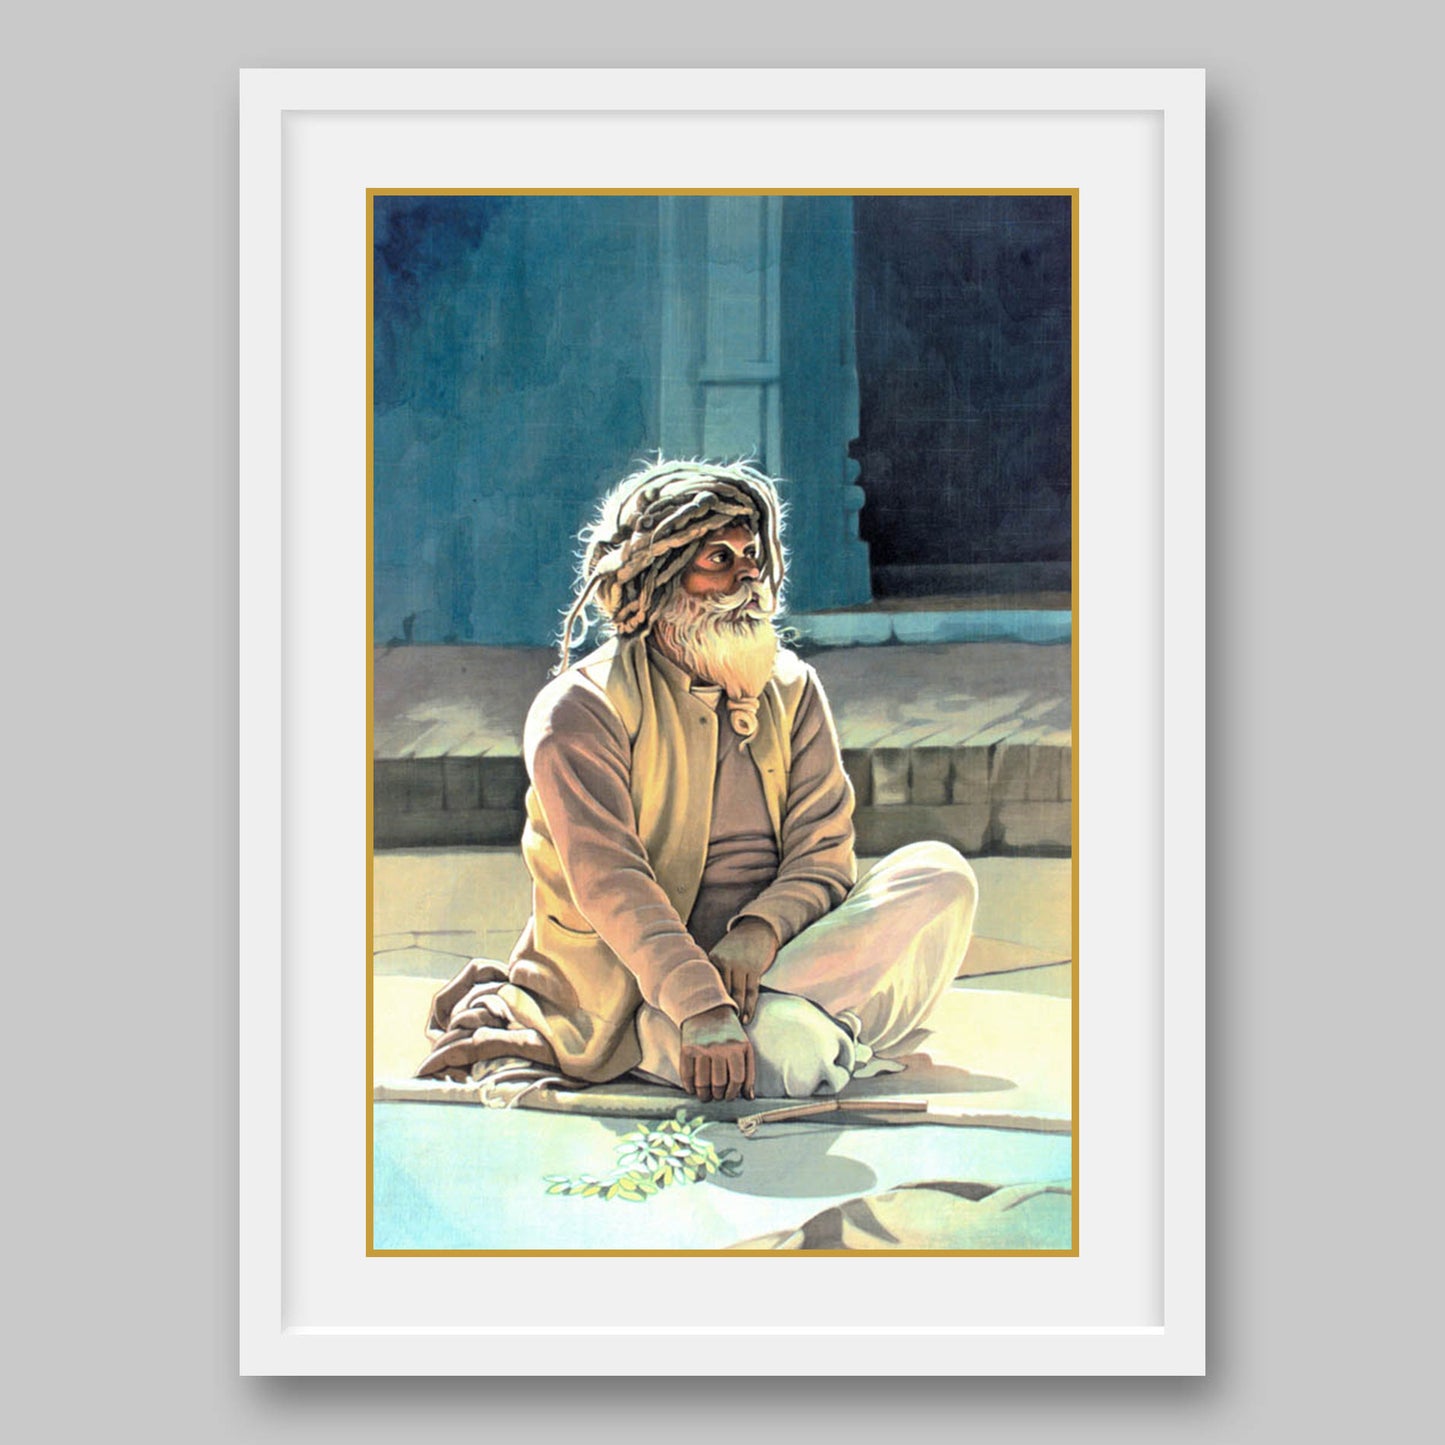 Sadhu With Dreadlocks - High Quality Print of Artwork by Pieter Weltevrede